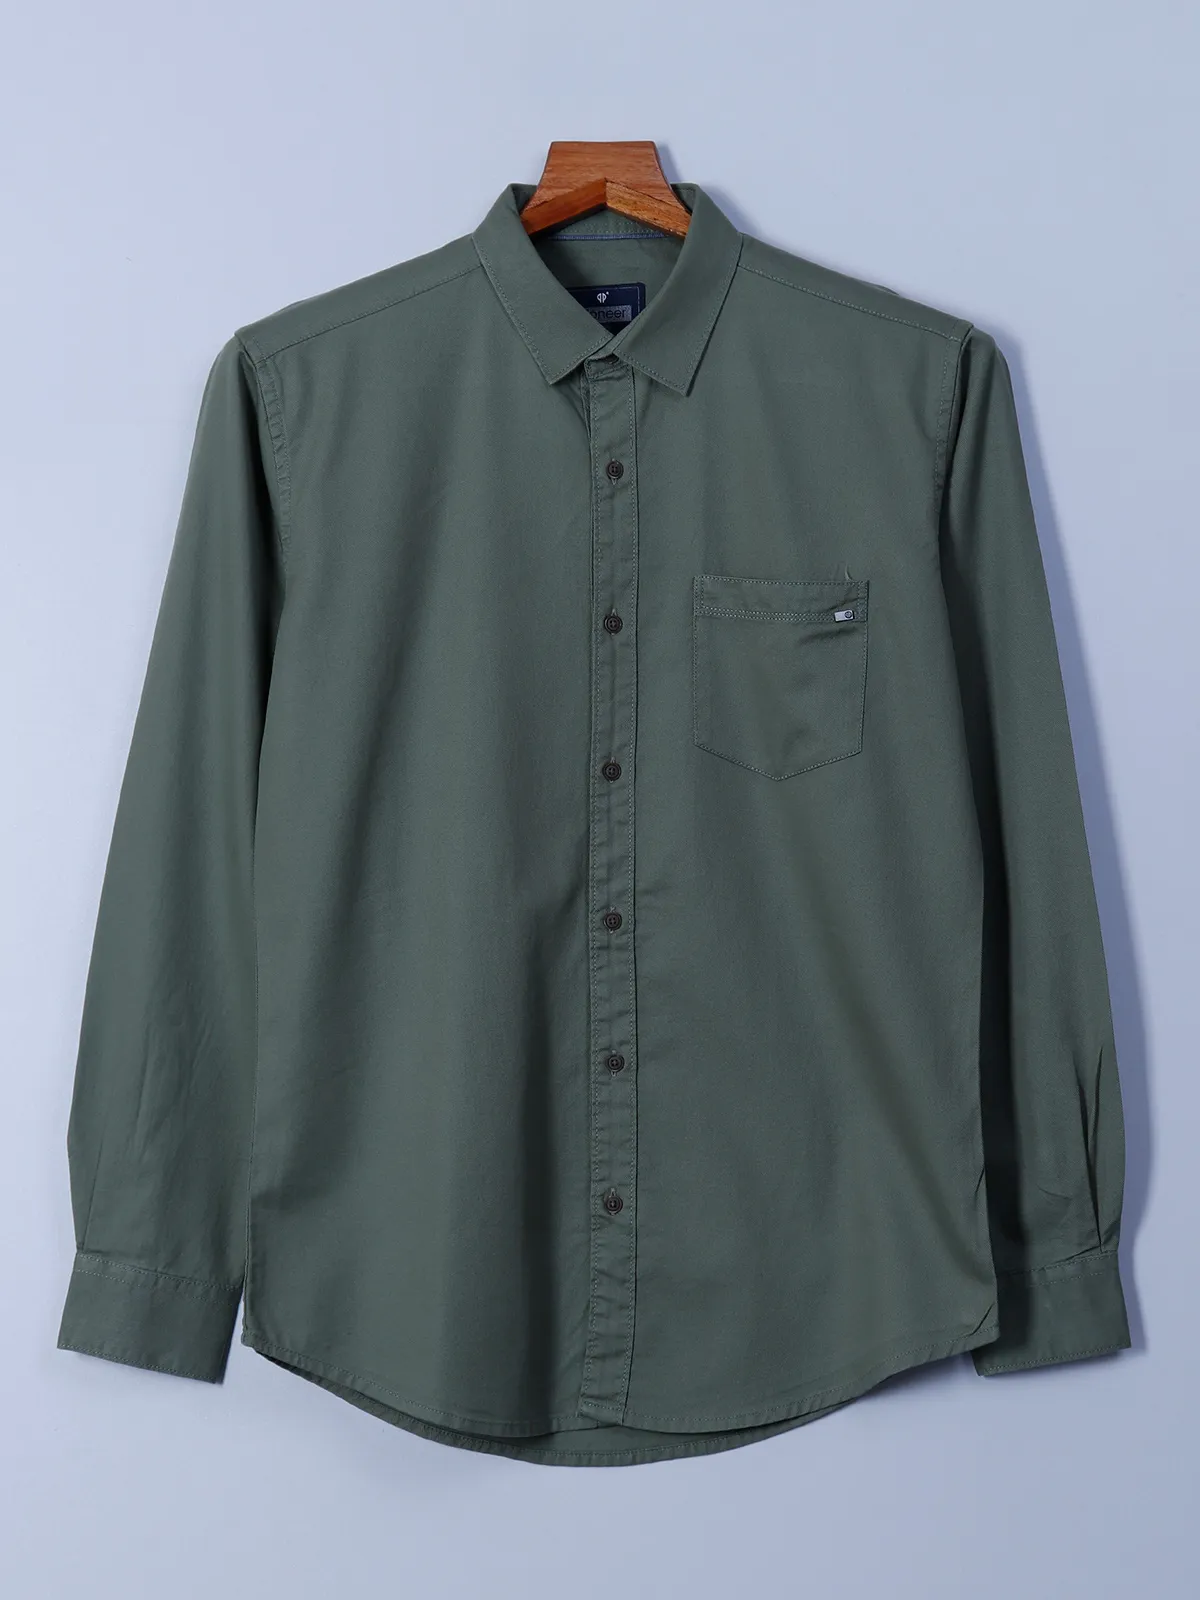 Pioneer dark green shirt in plain